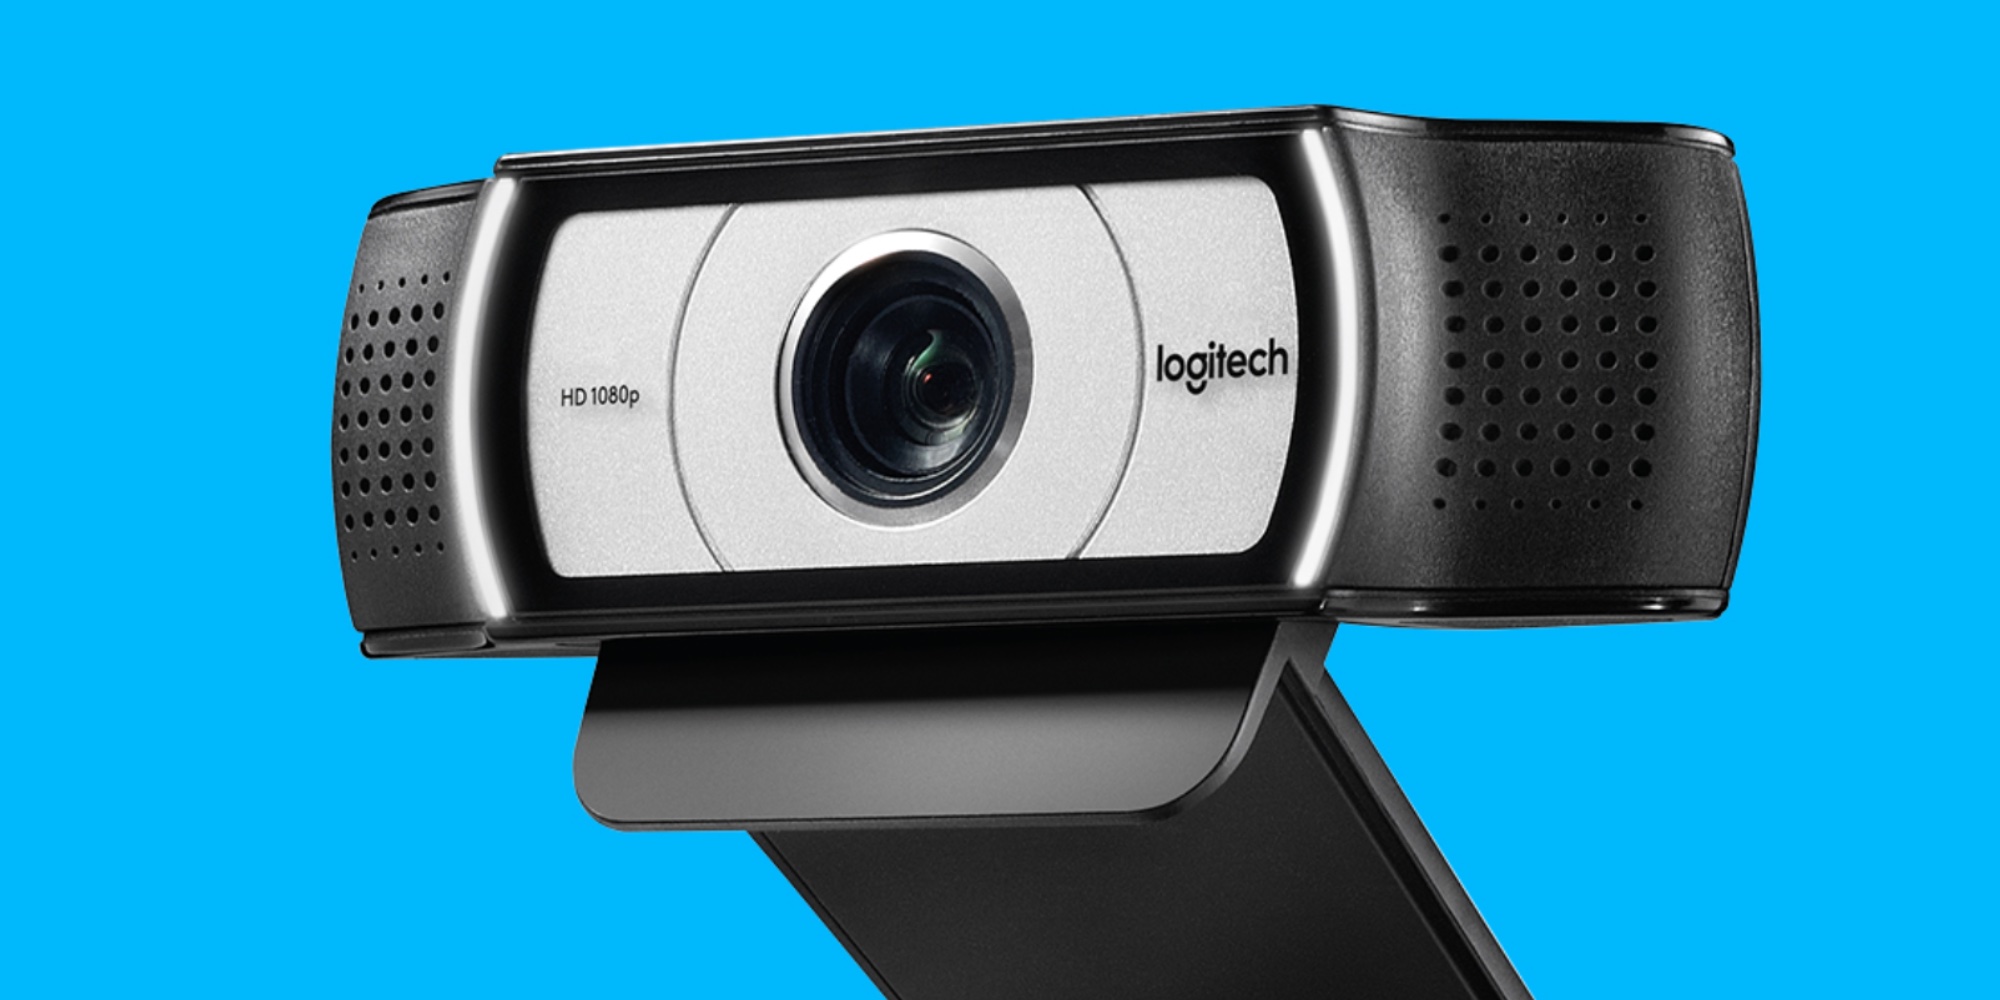 Finally upgrade with 1080p C930e Webcam at $70 (Save 30%)